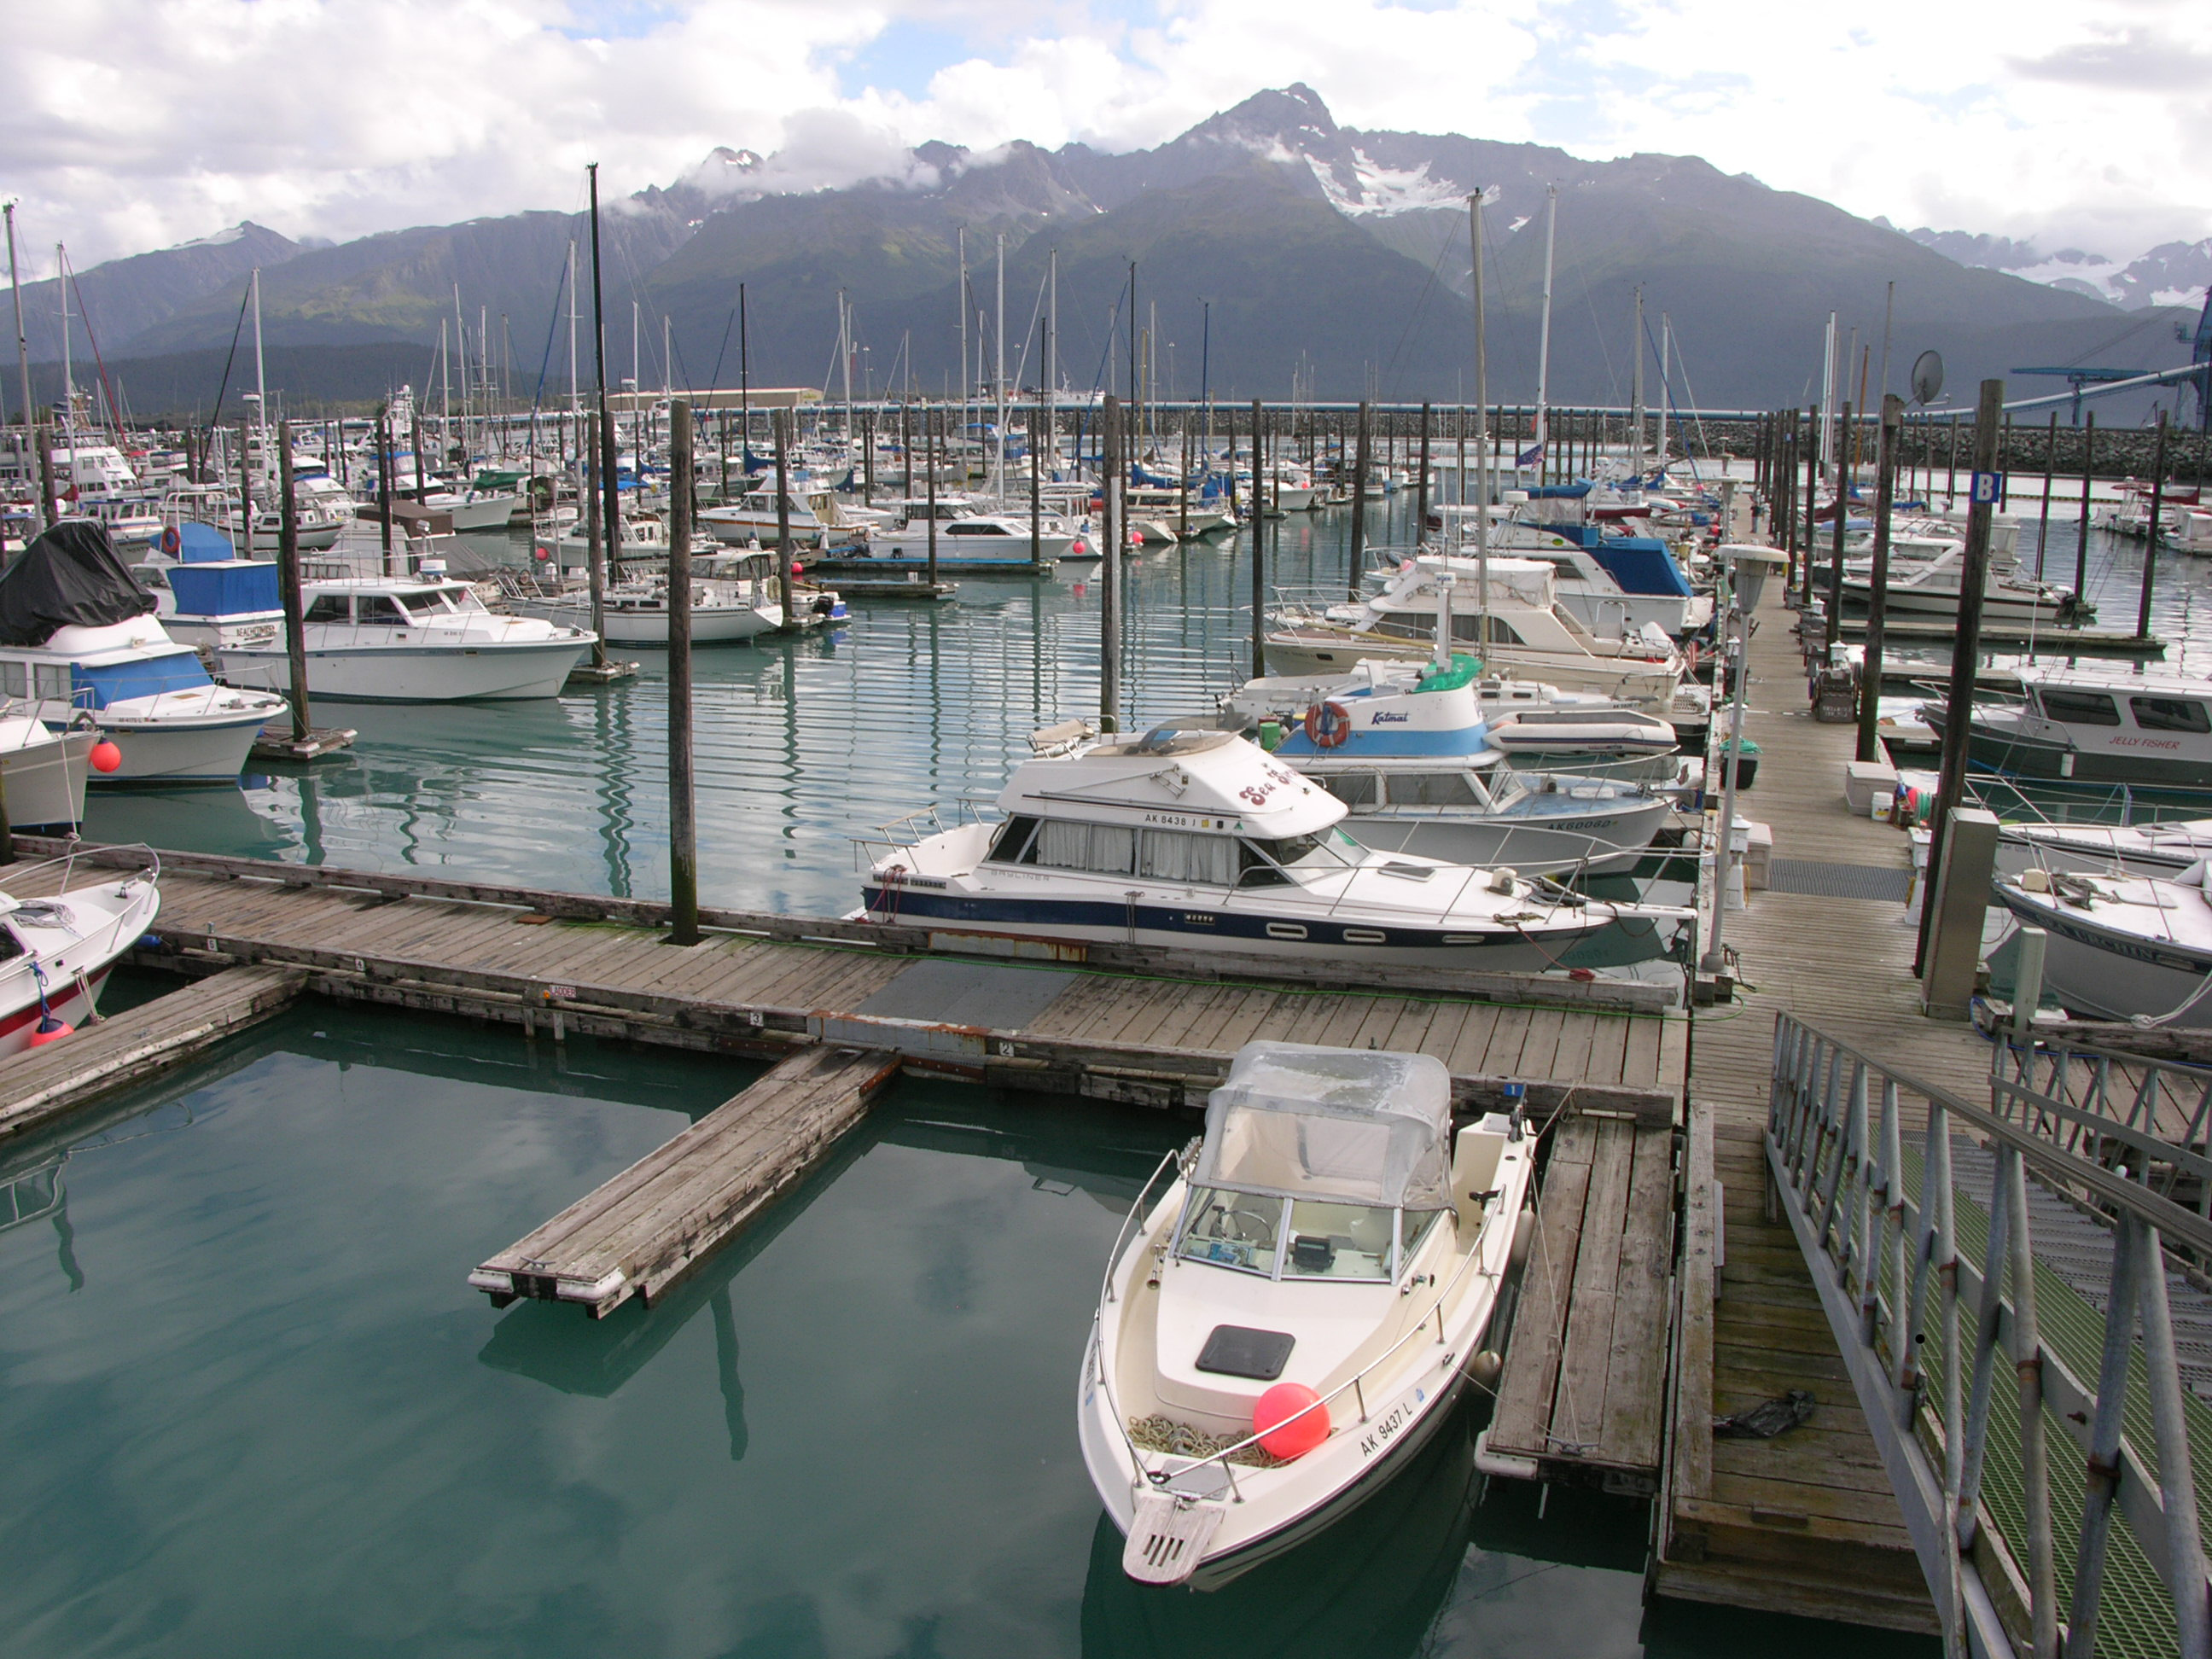 File:Seward Docks.jpg - Wikimedia Commons